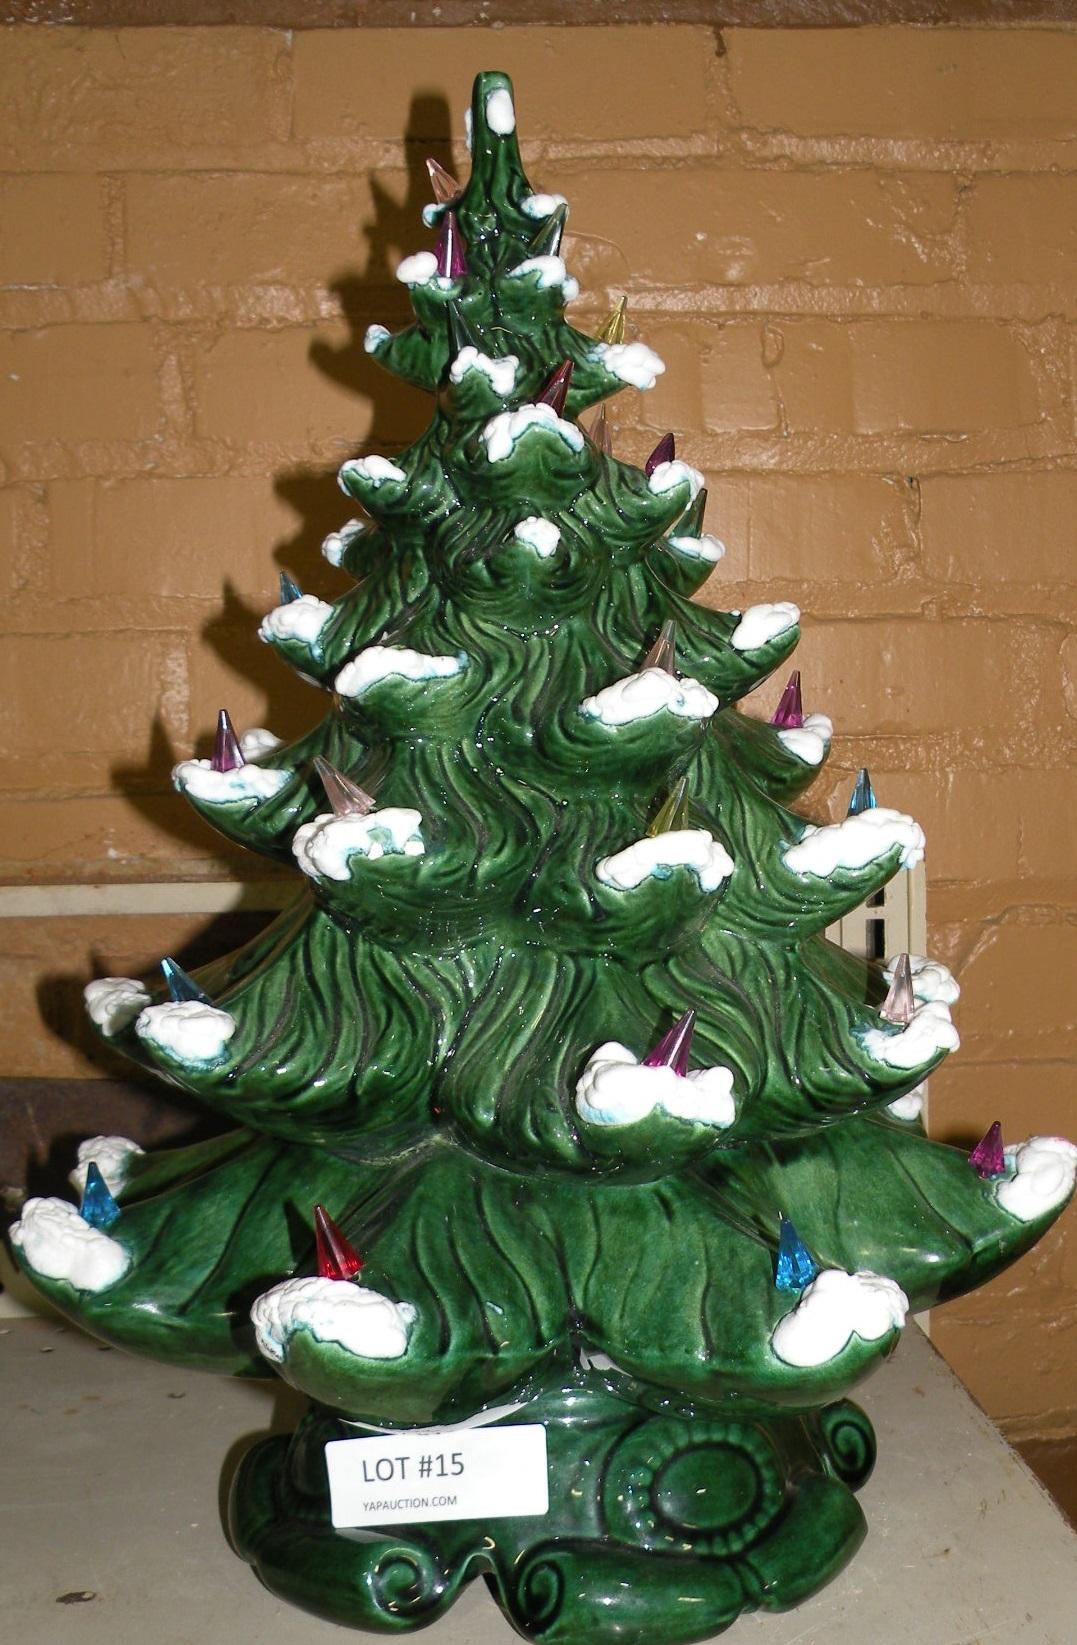 CERAMIC LIGHTED CHRISTMAS TREE - WORKS, SOME DAMAGE